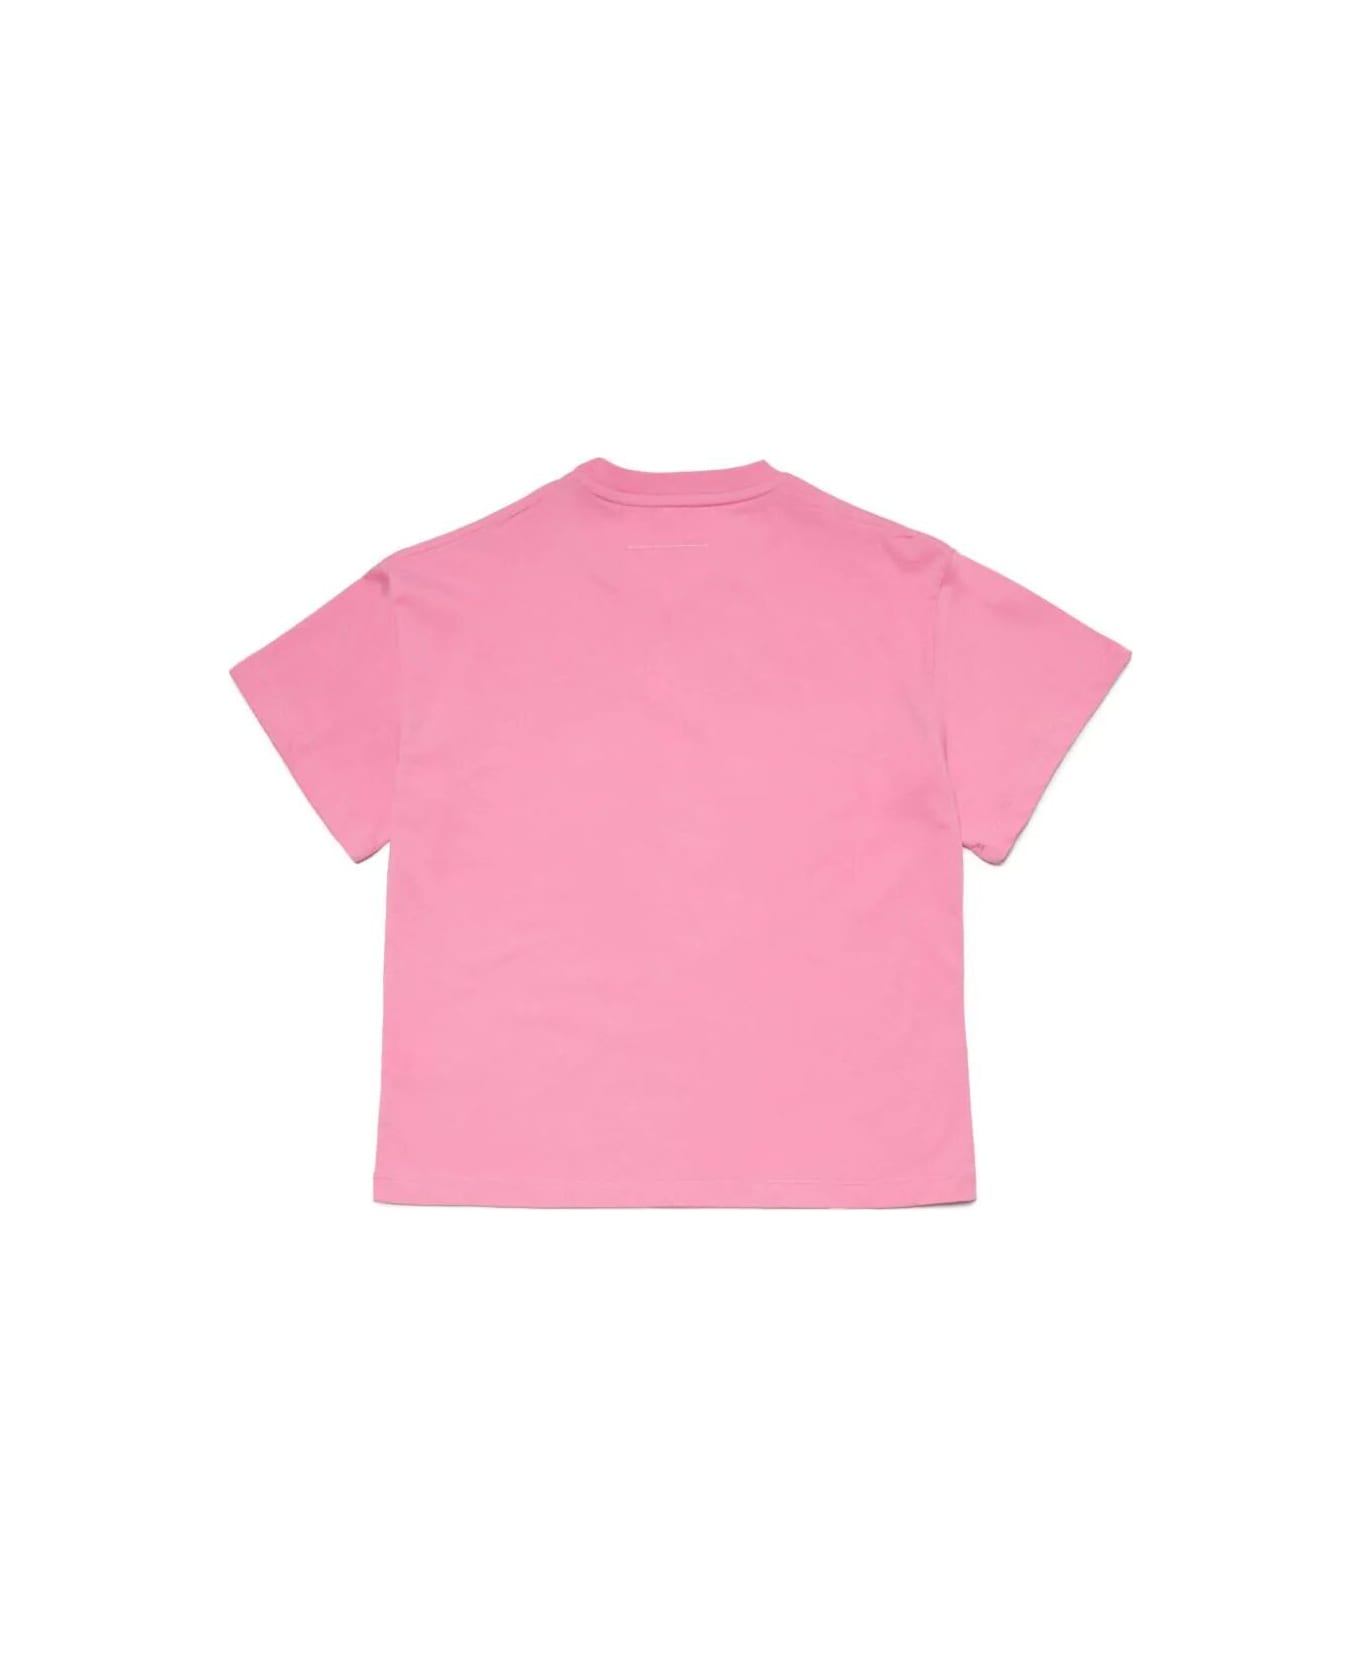 MM6 Maison Margiela T-shirt - Pink